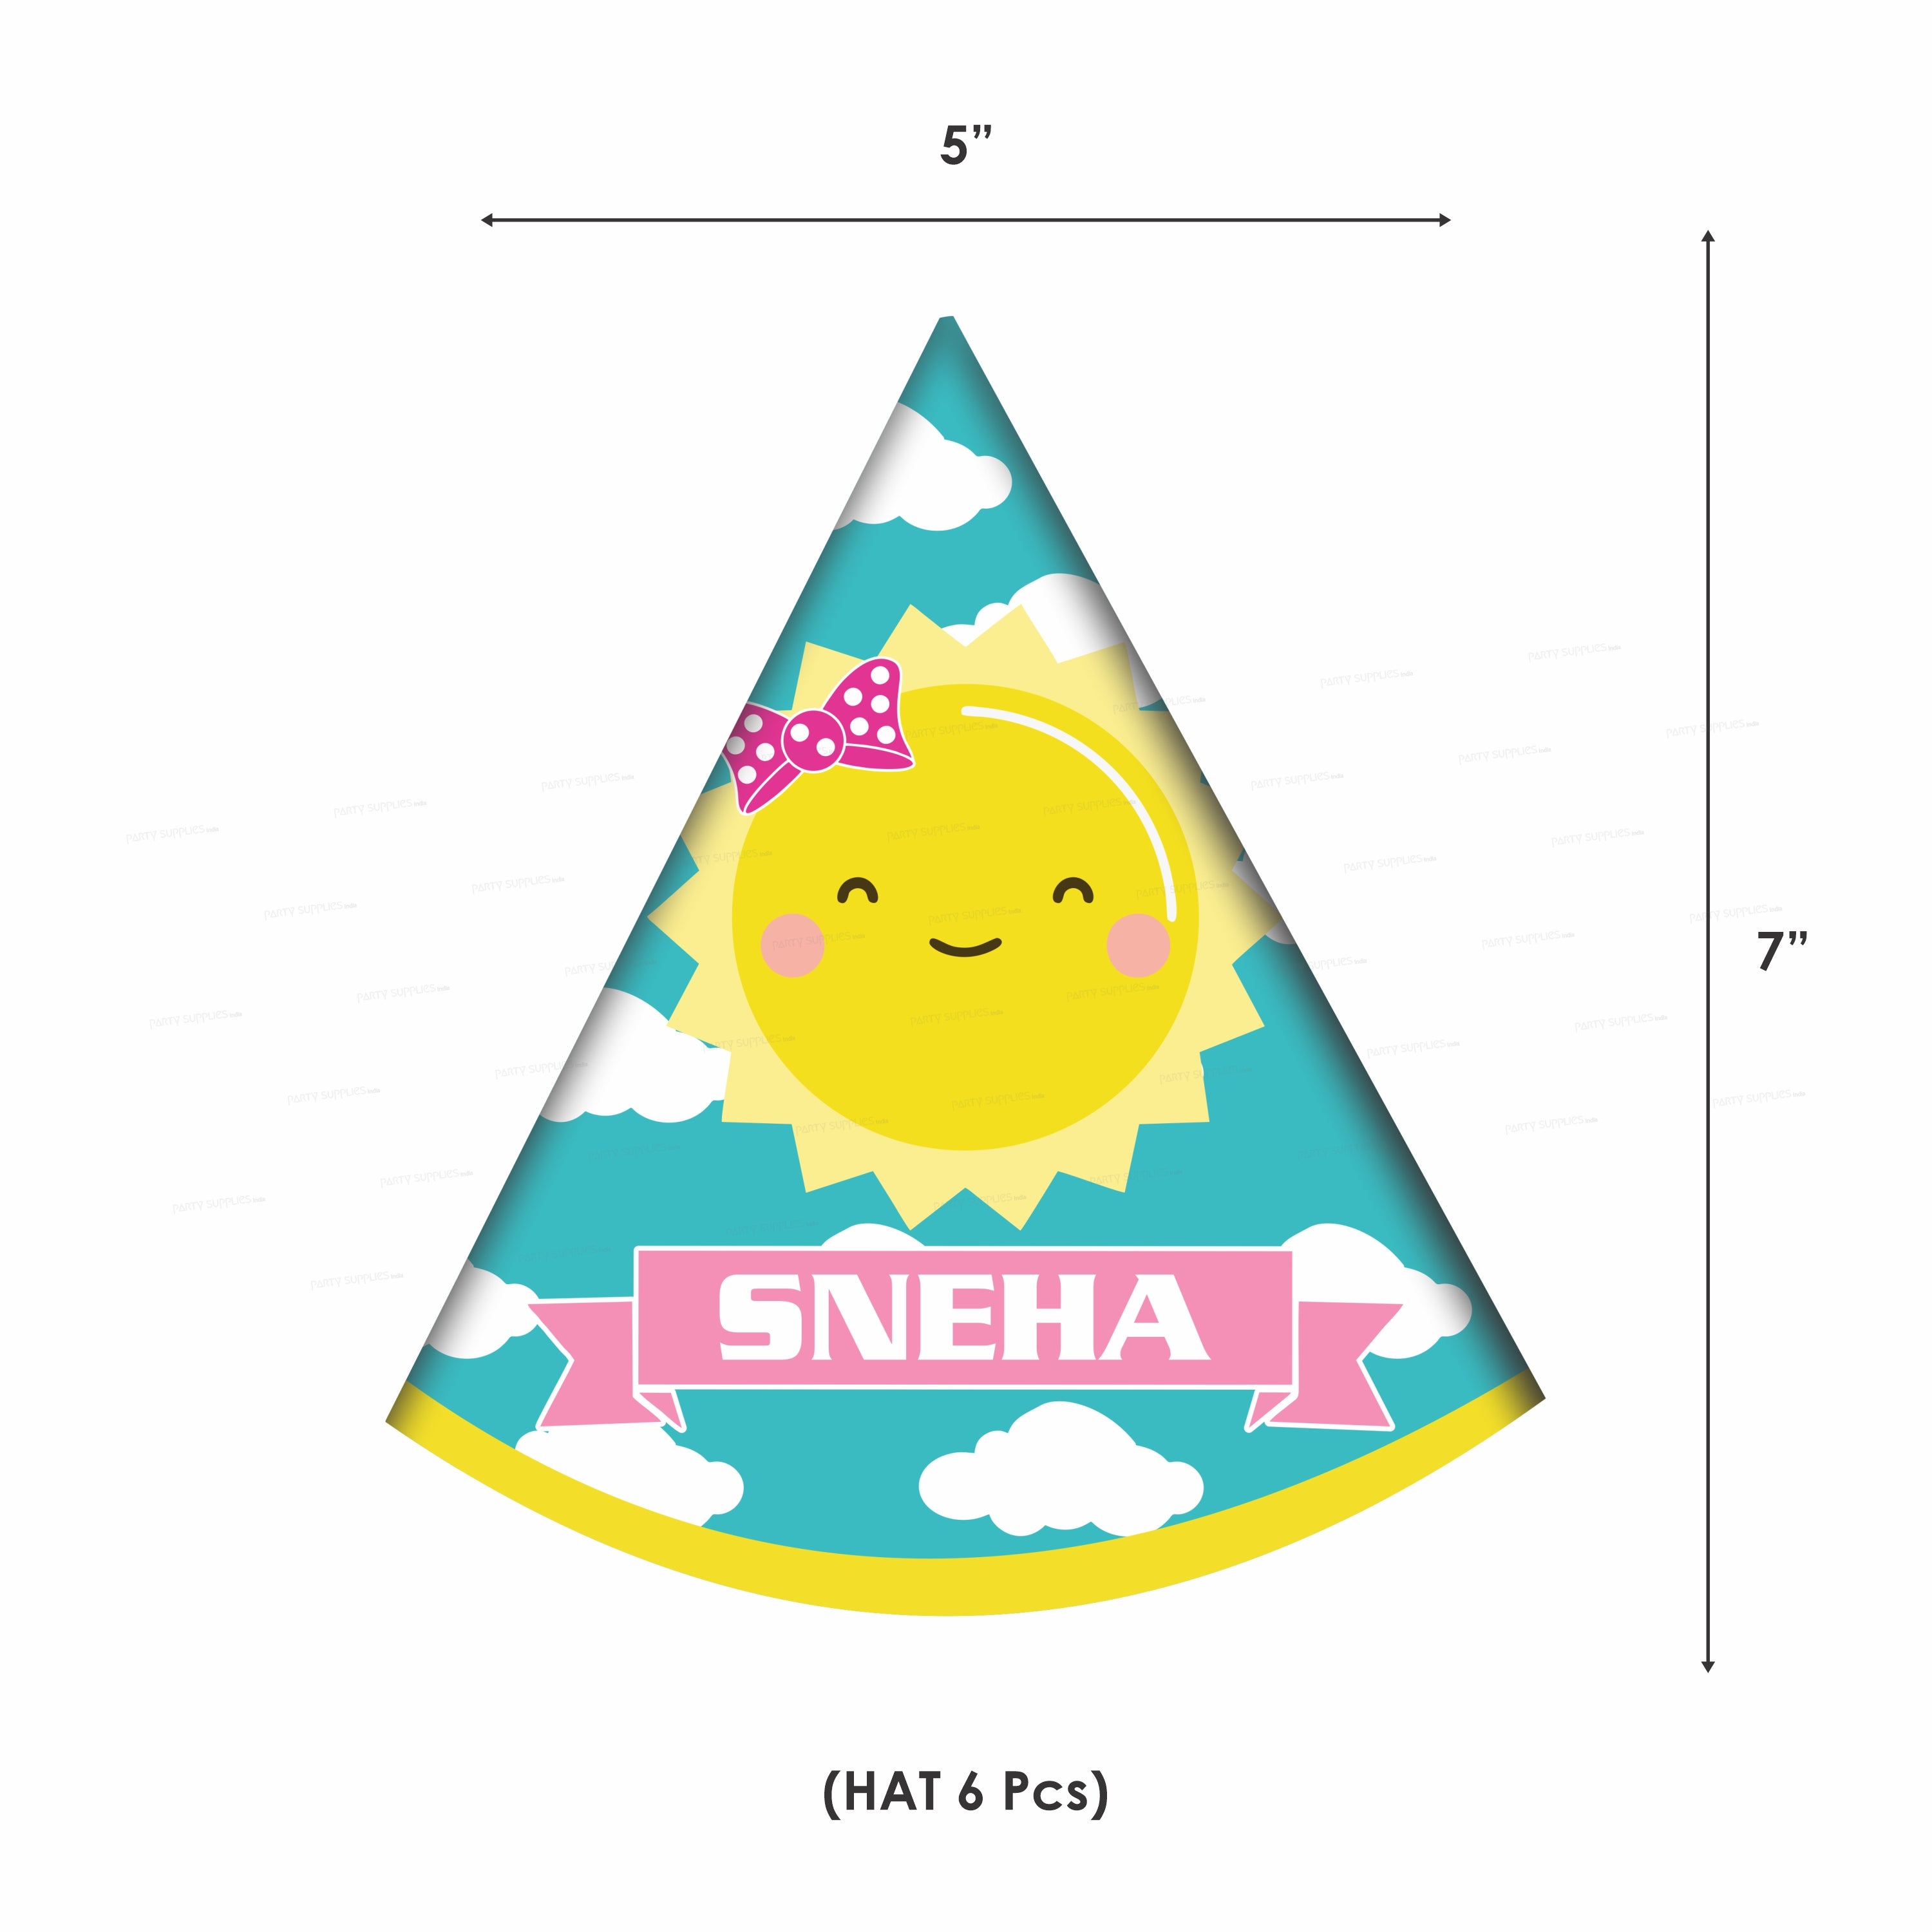 PSI Sunshine Girl Theme Preferred Kit